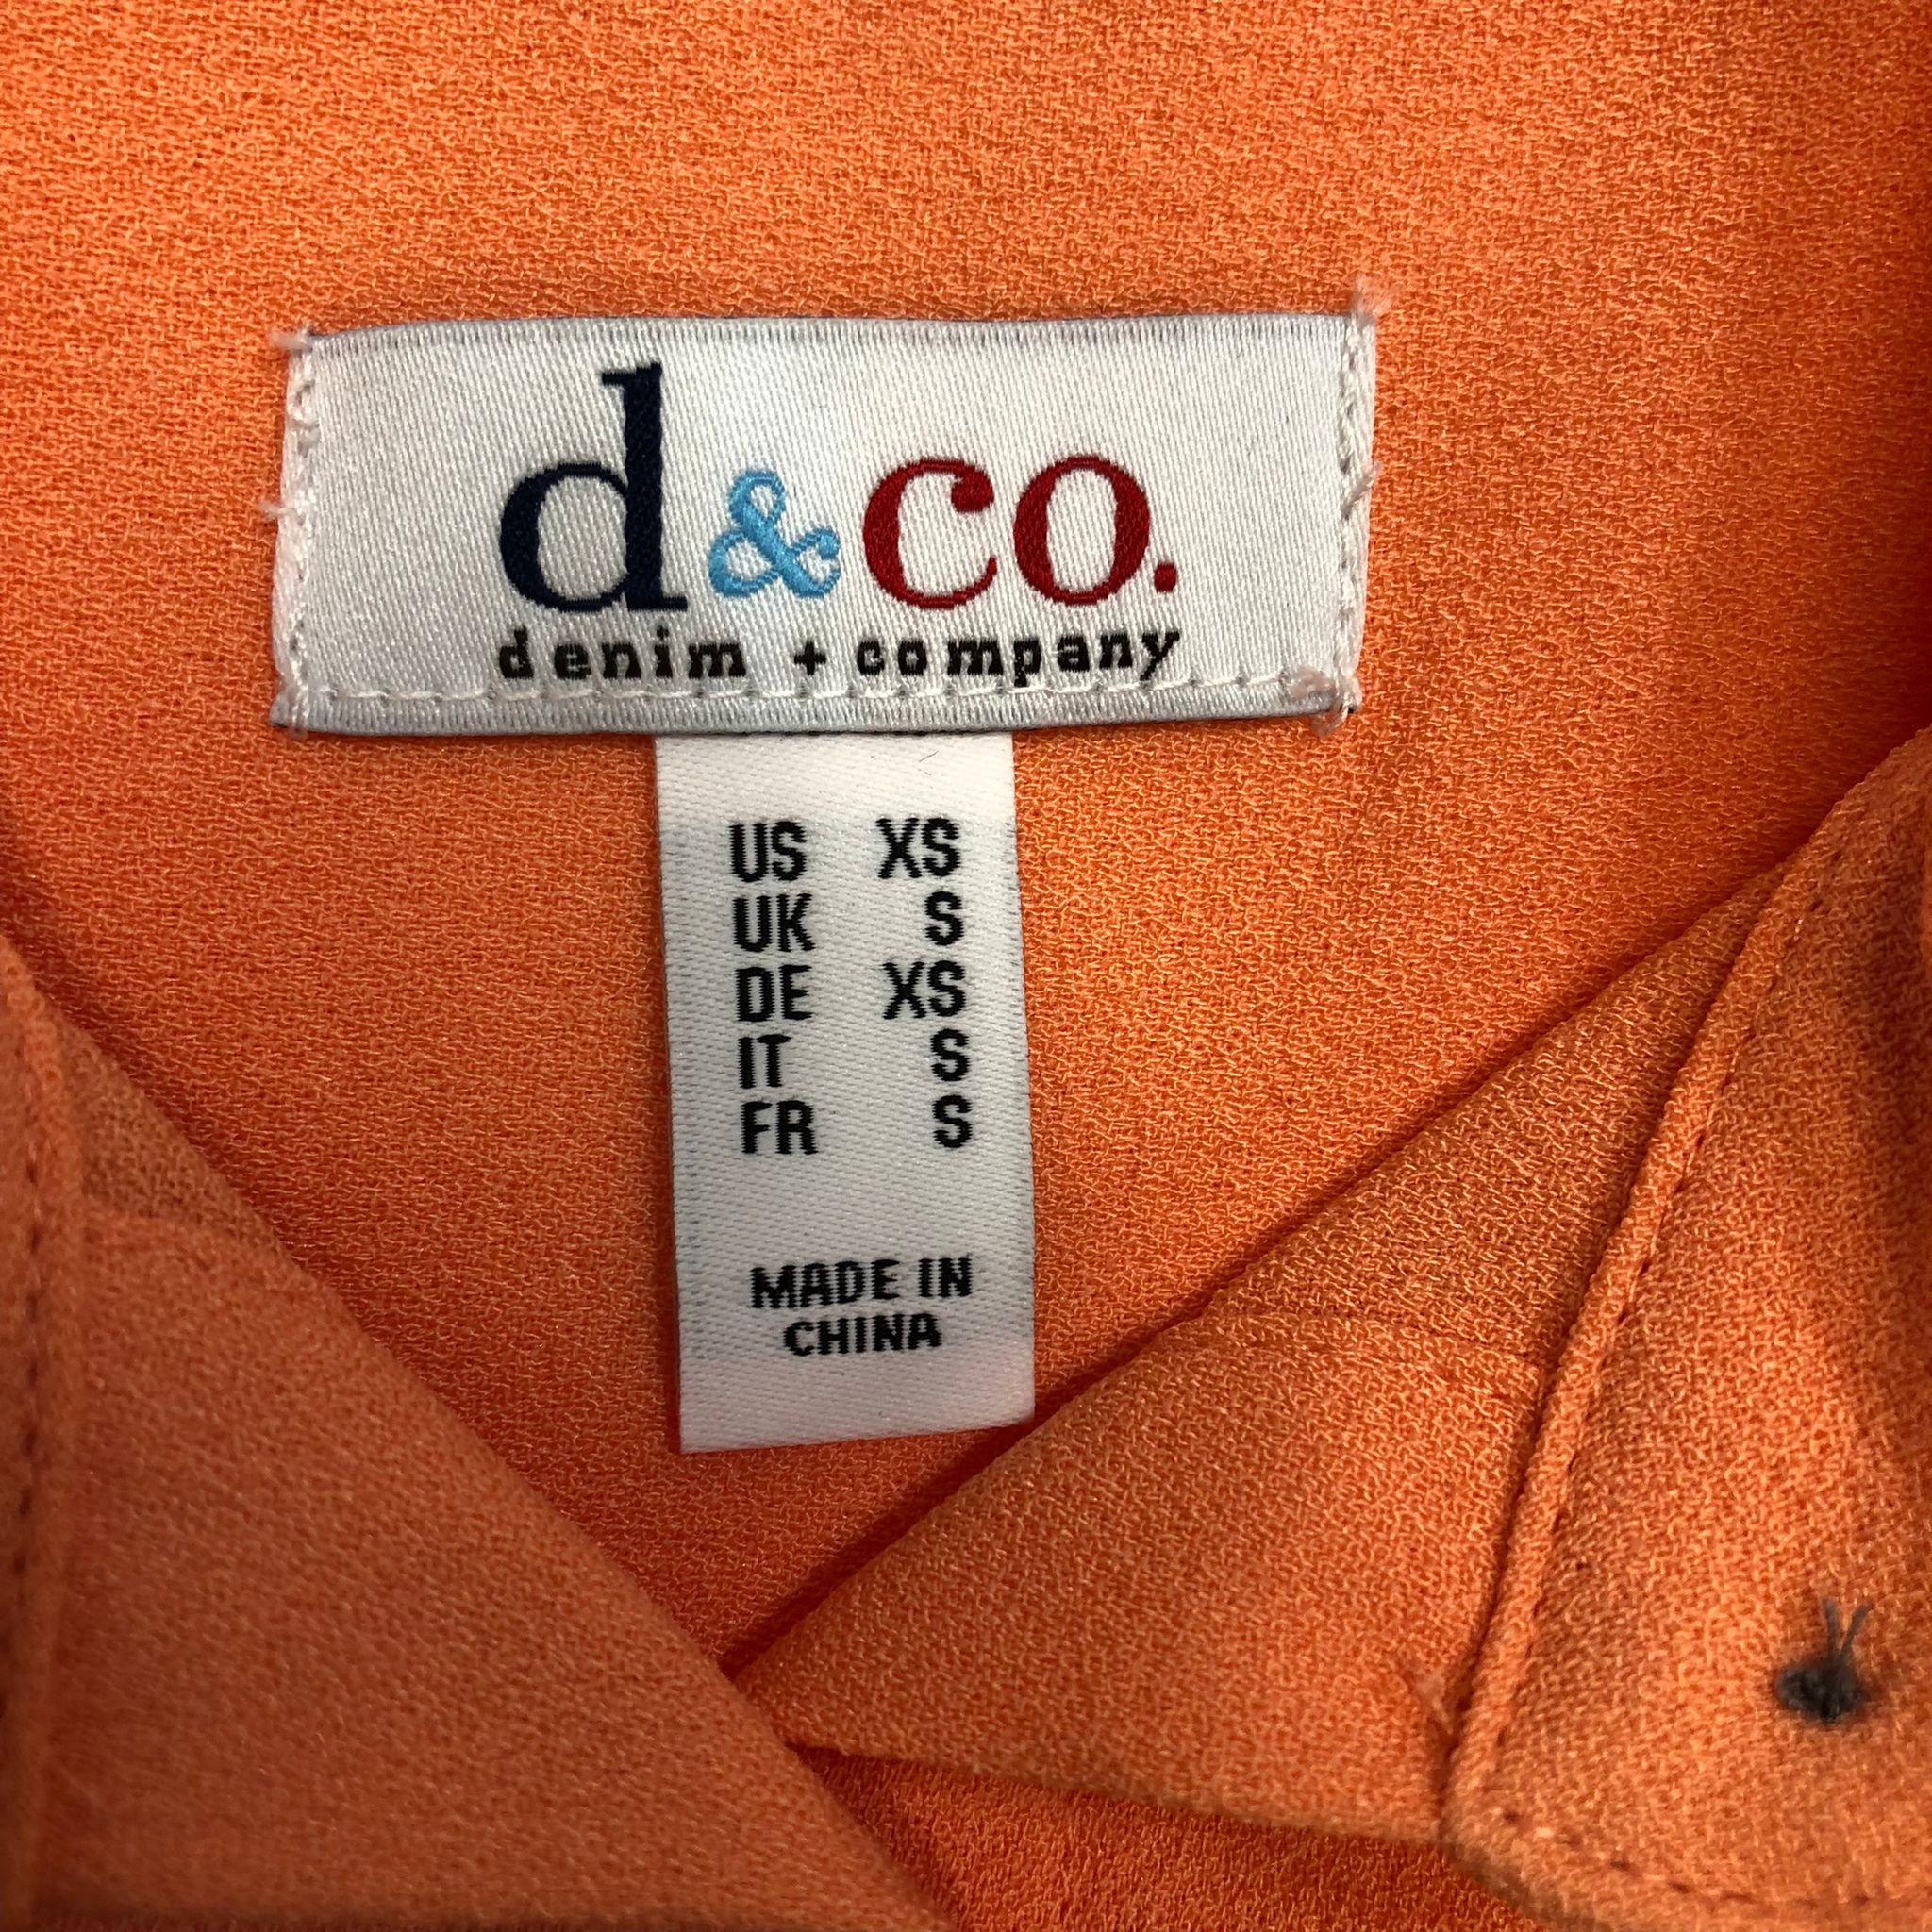 Denim & Co. Button Front Sleeveless Shirt with Shirttail Hem